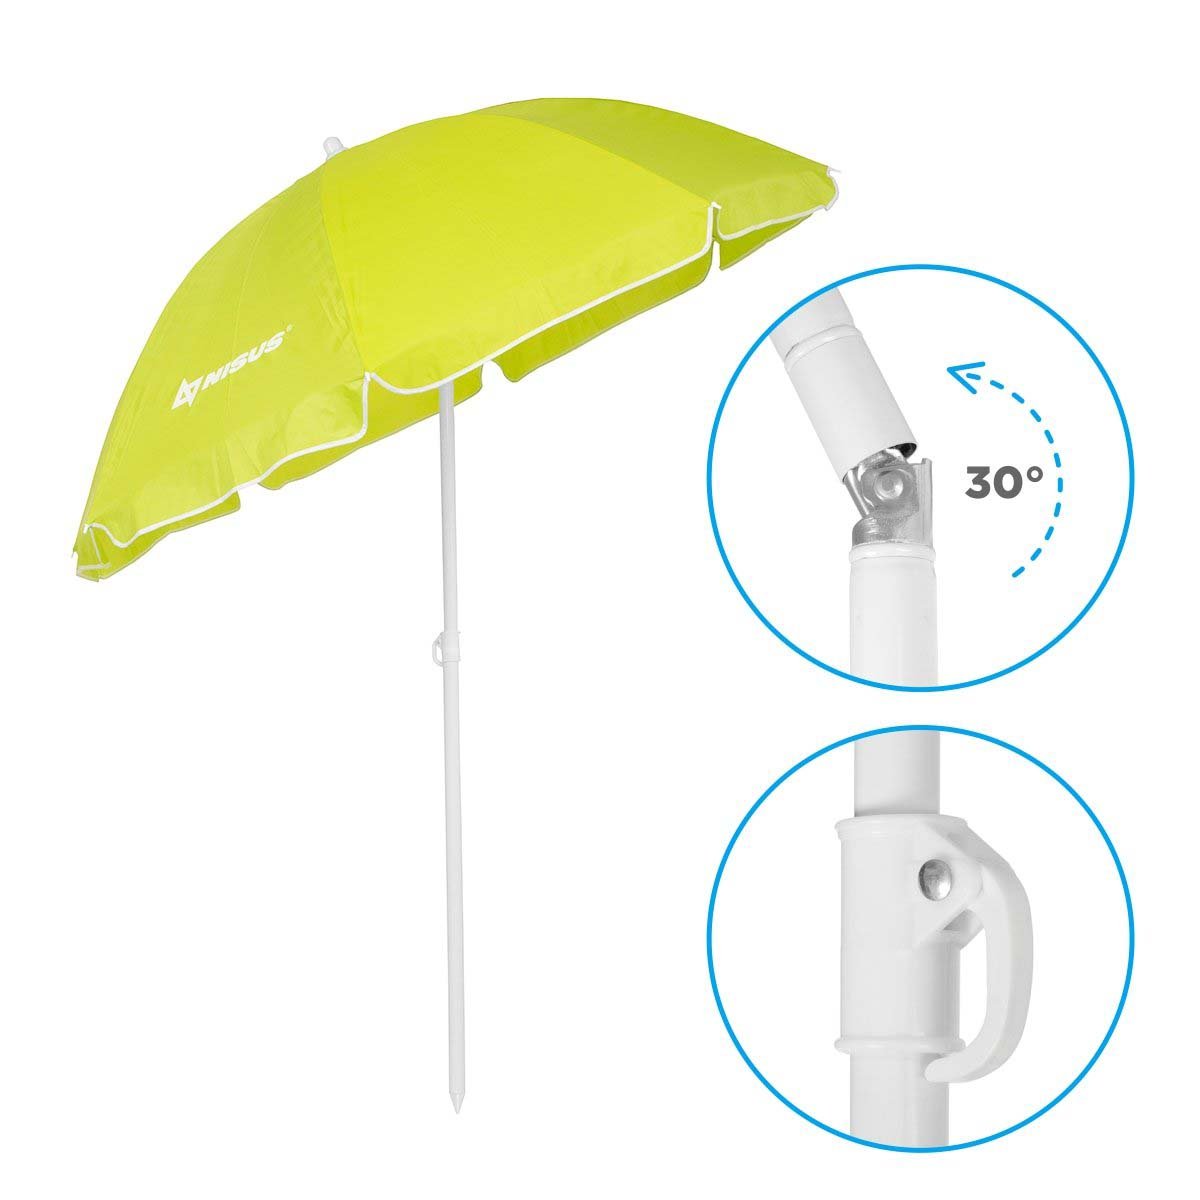 Lime Green Tilting Beach Umbrella featuring a 30 inclination degree